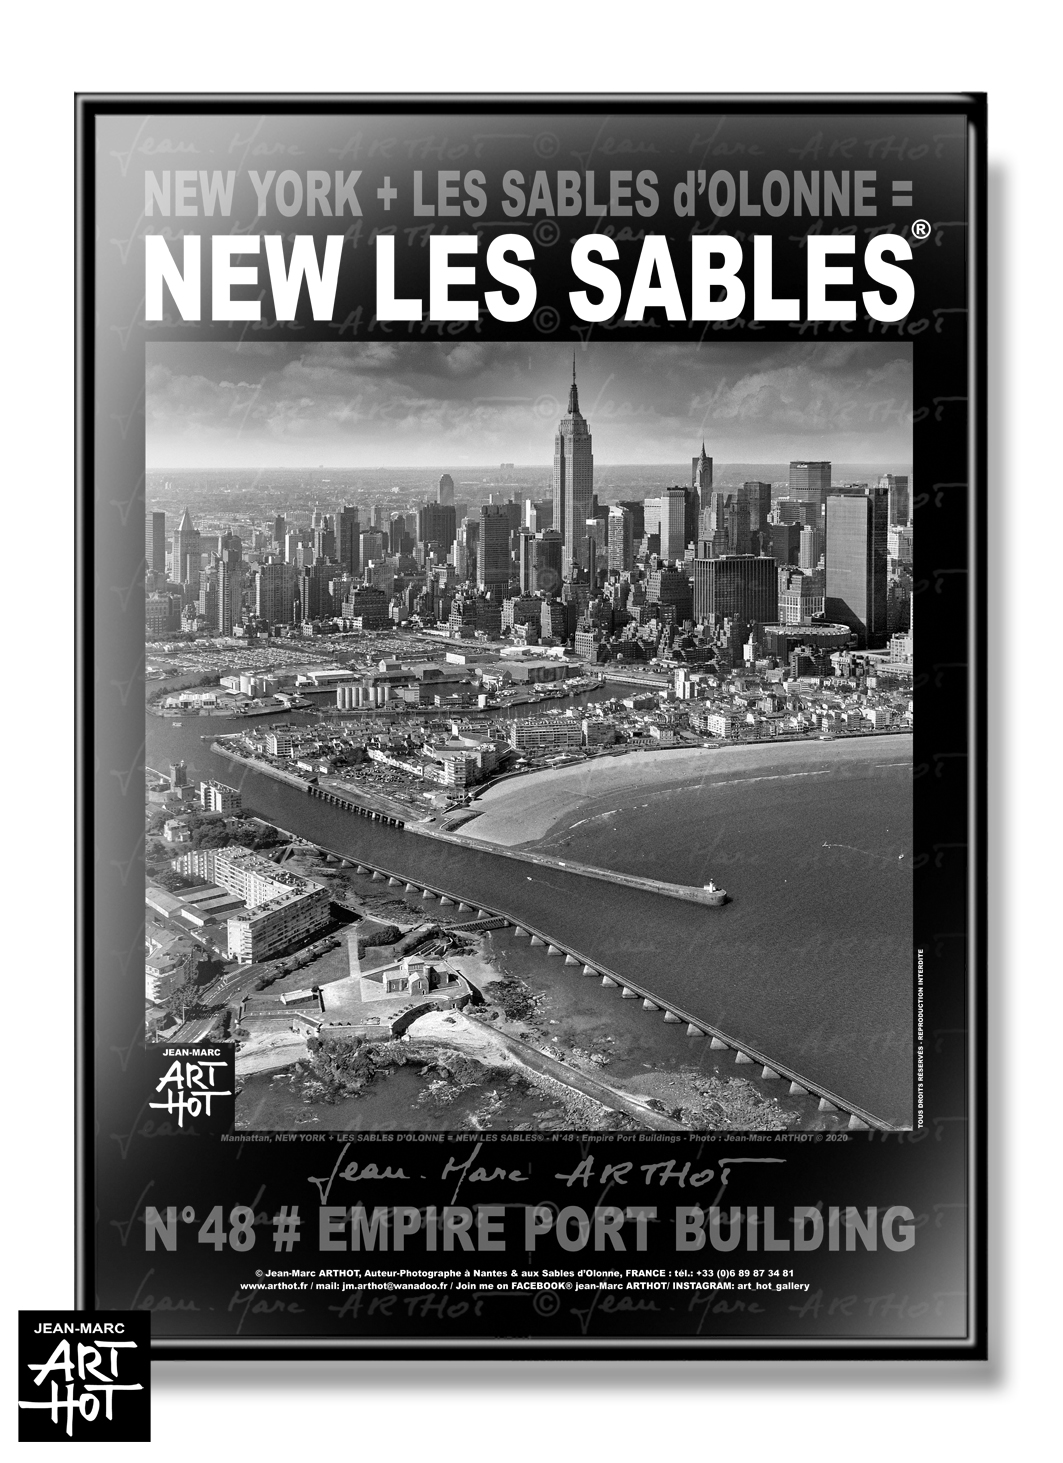 arthot-photo-art-b&w-new-york-vendee-sables-olonne-newlessables-048-chenal-aero-vertic-AFFICHE